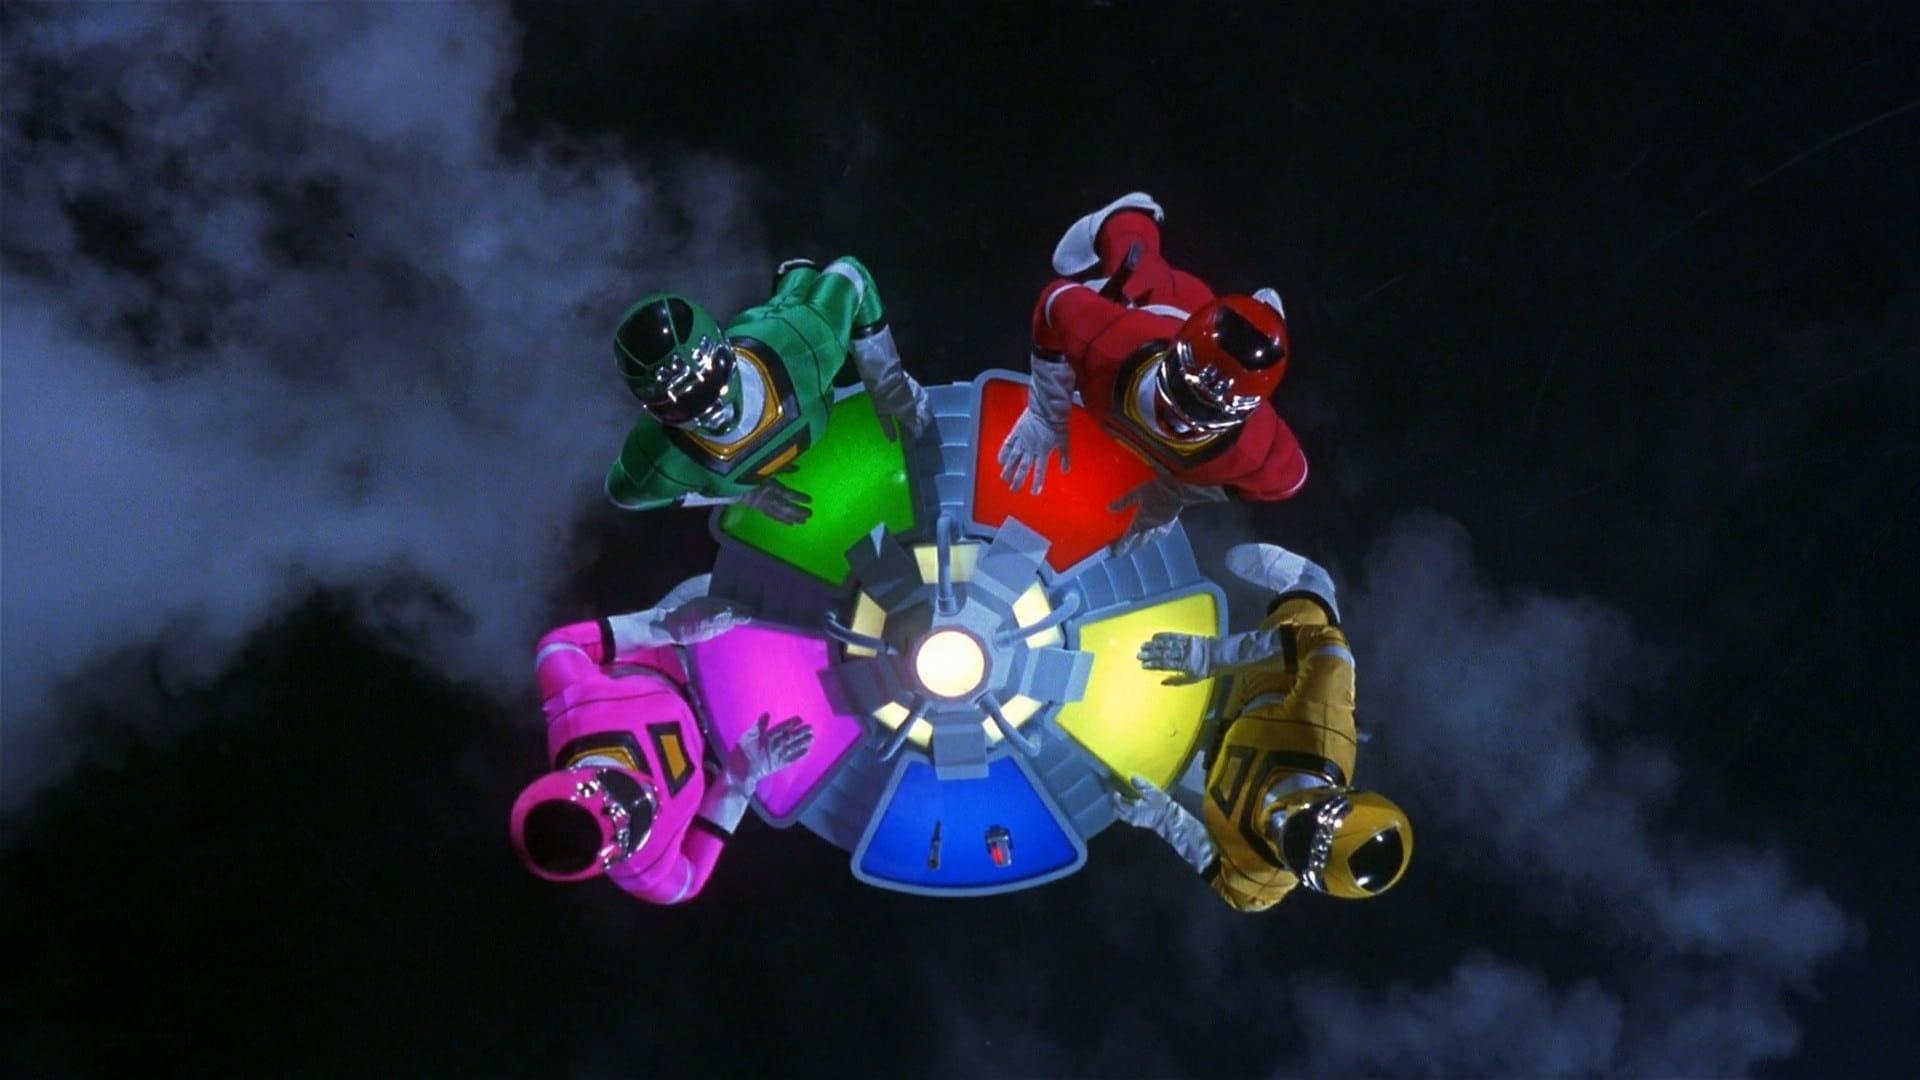 Turbo: A Power Rangers Movie backdrop